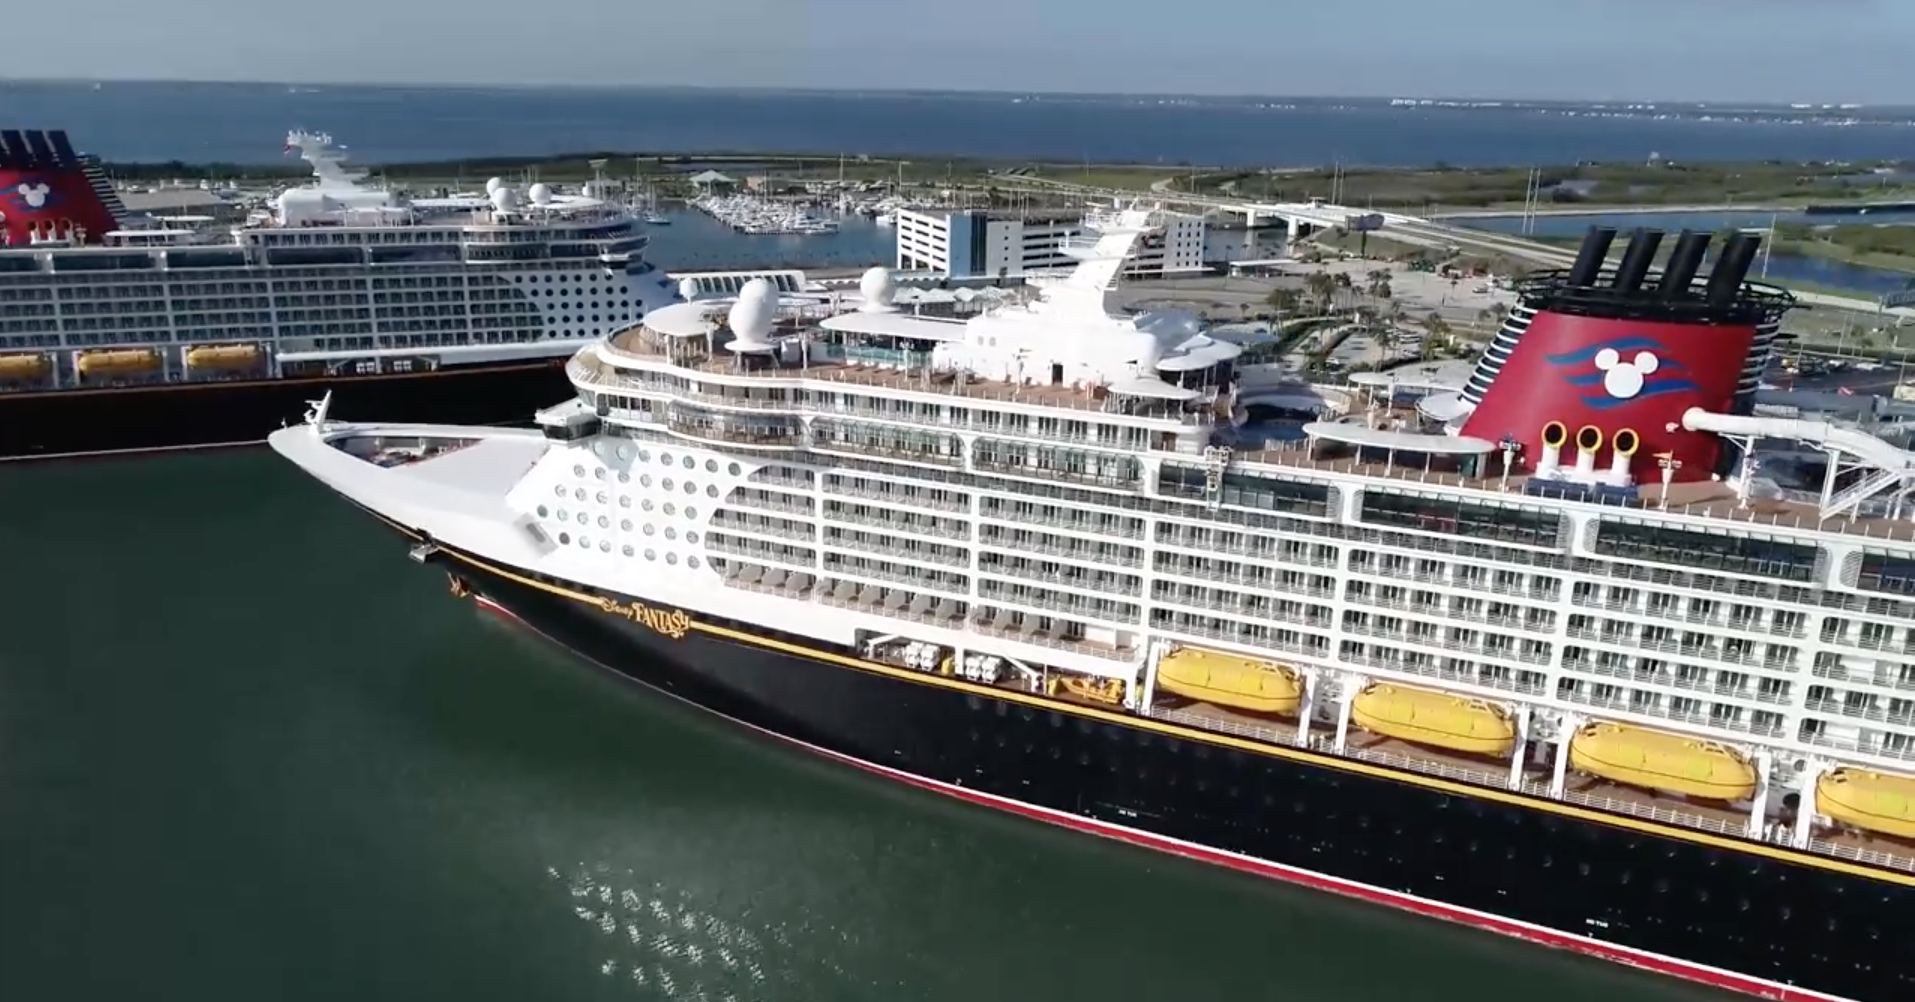 PHOTOS, VIDEO: Nearly Entire Disney Cruise Line Fleet Docked at Port